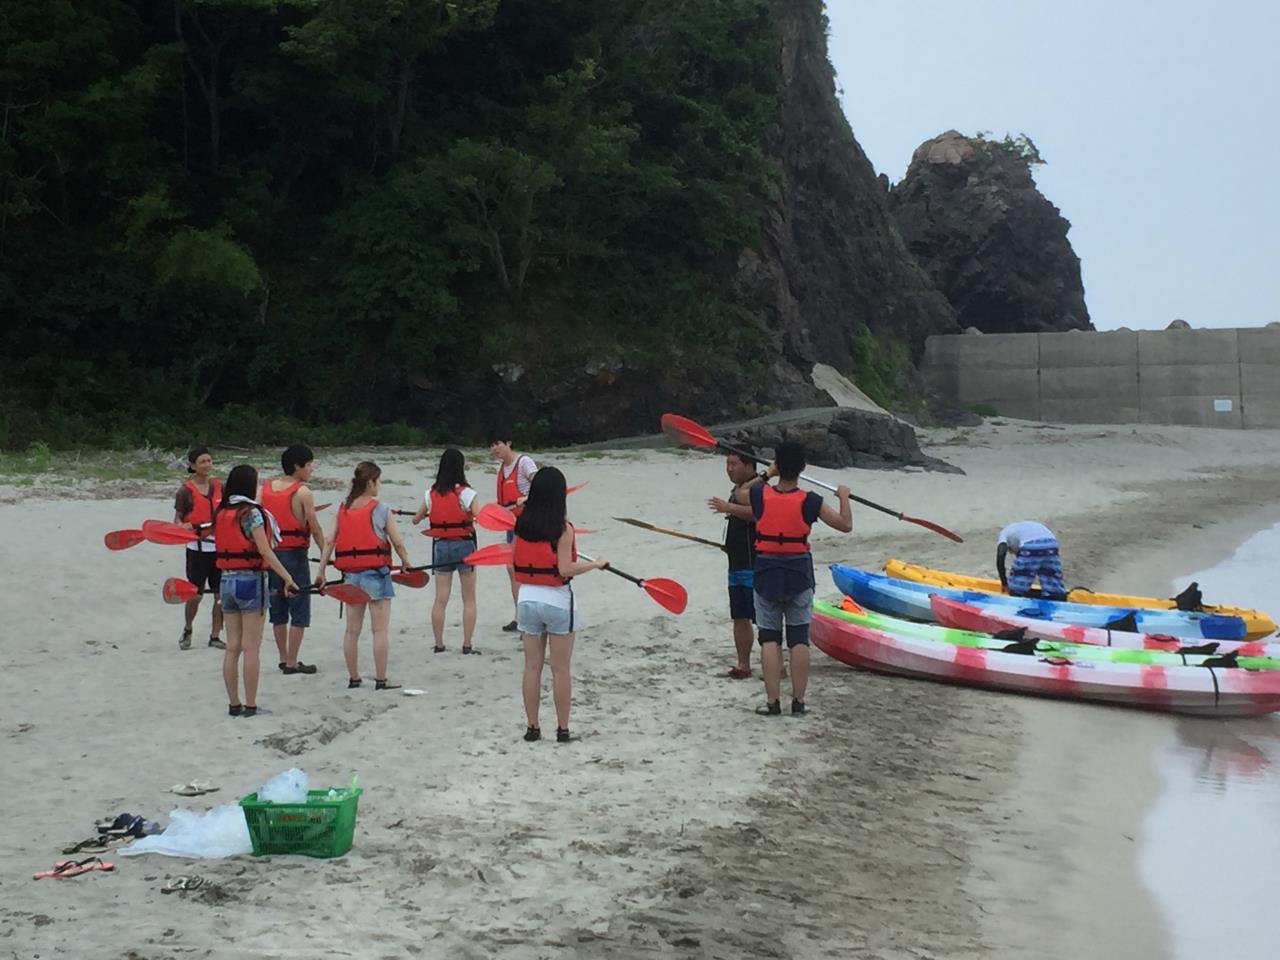 Ine sea kayaking experience at the "legendary place of Taro Urashima"